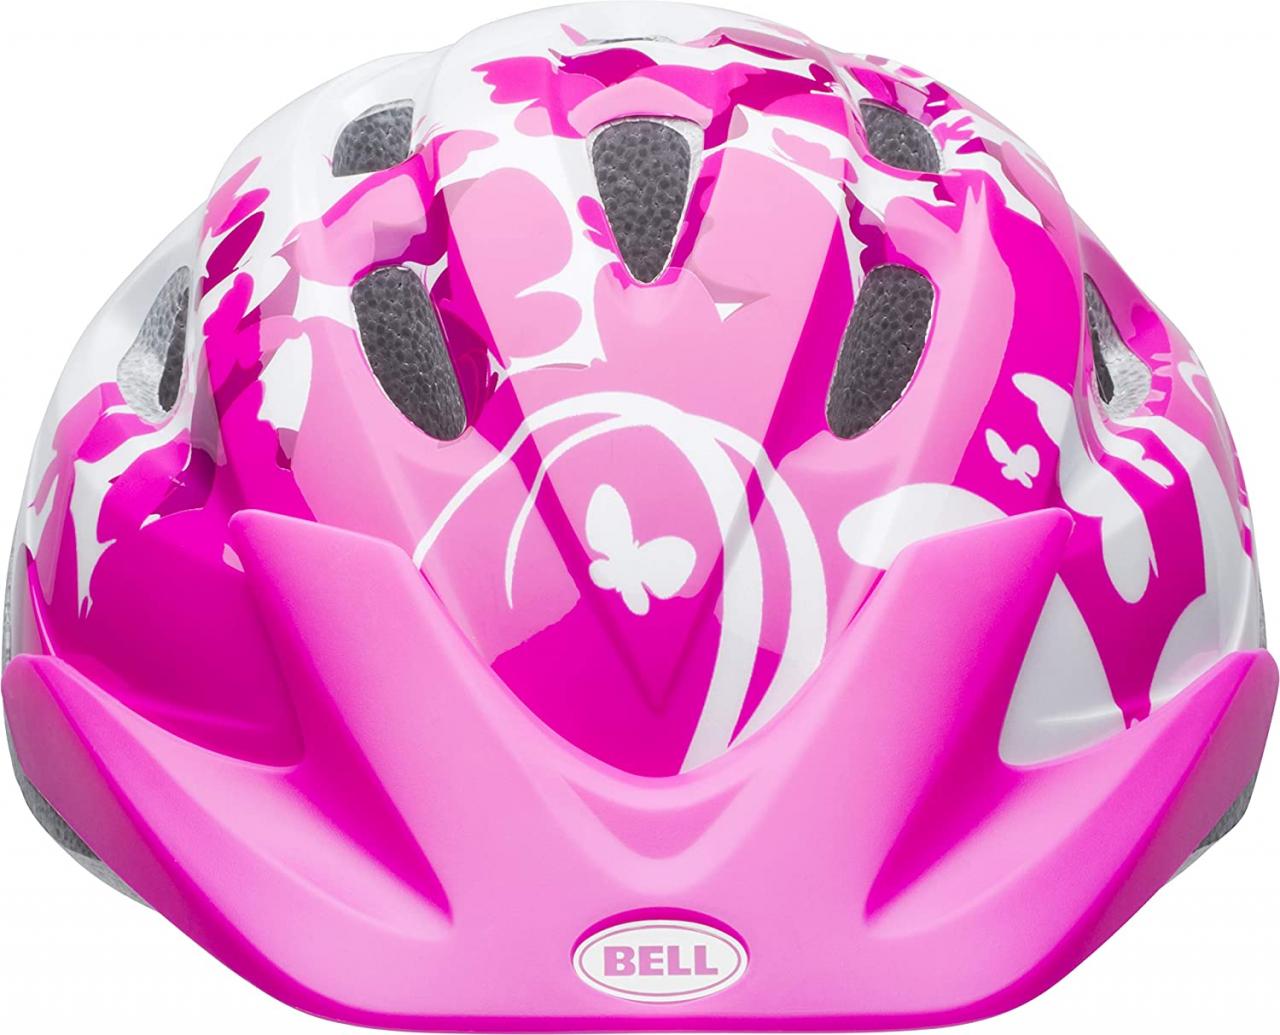 Buy Bell Rally Child Helmet Online in Taiwan. B01ABWAPCE